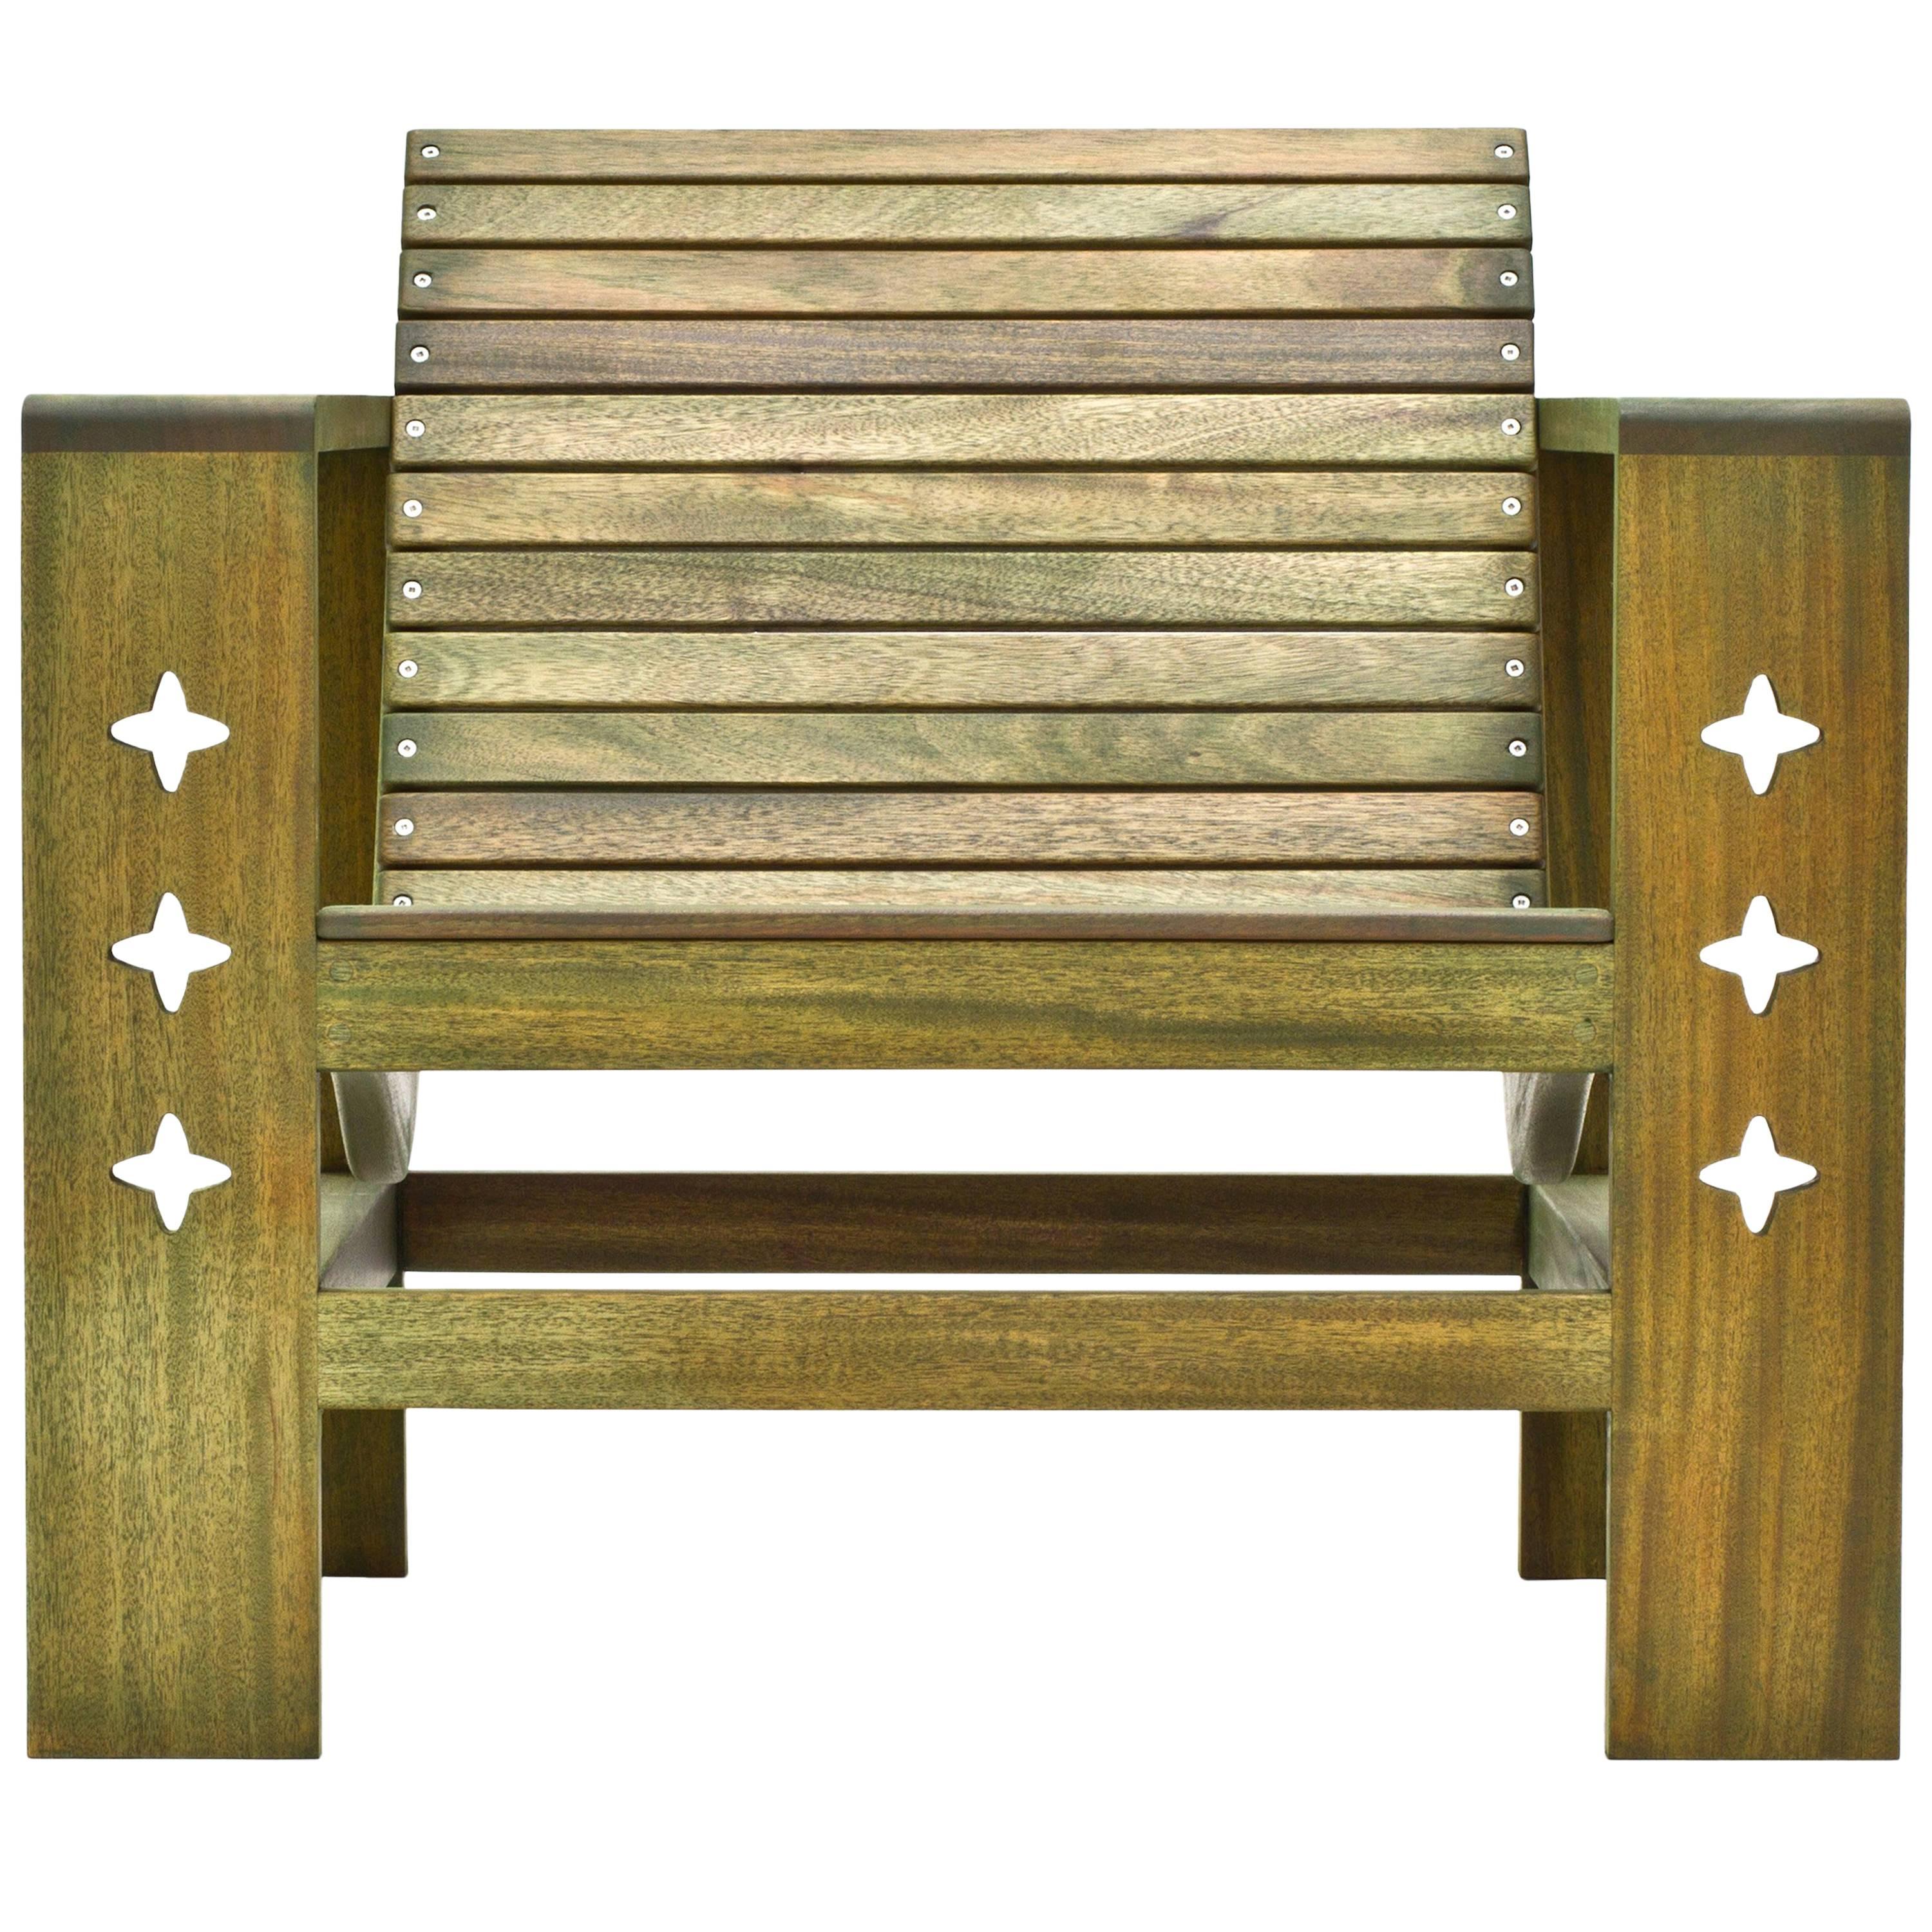 Uti 'Ooh-Tee' Lounge Chair in Mahogany with Sage Finish, Wooda Original For Sale